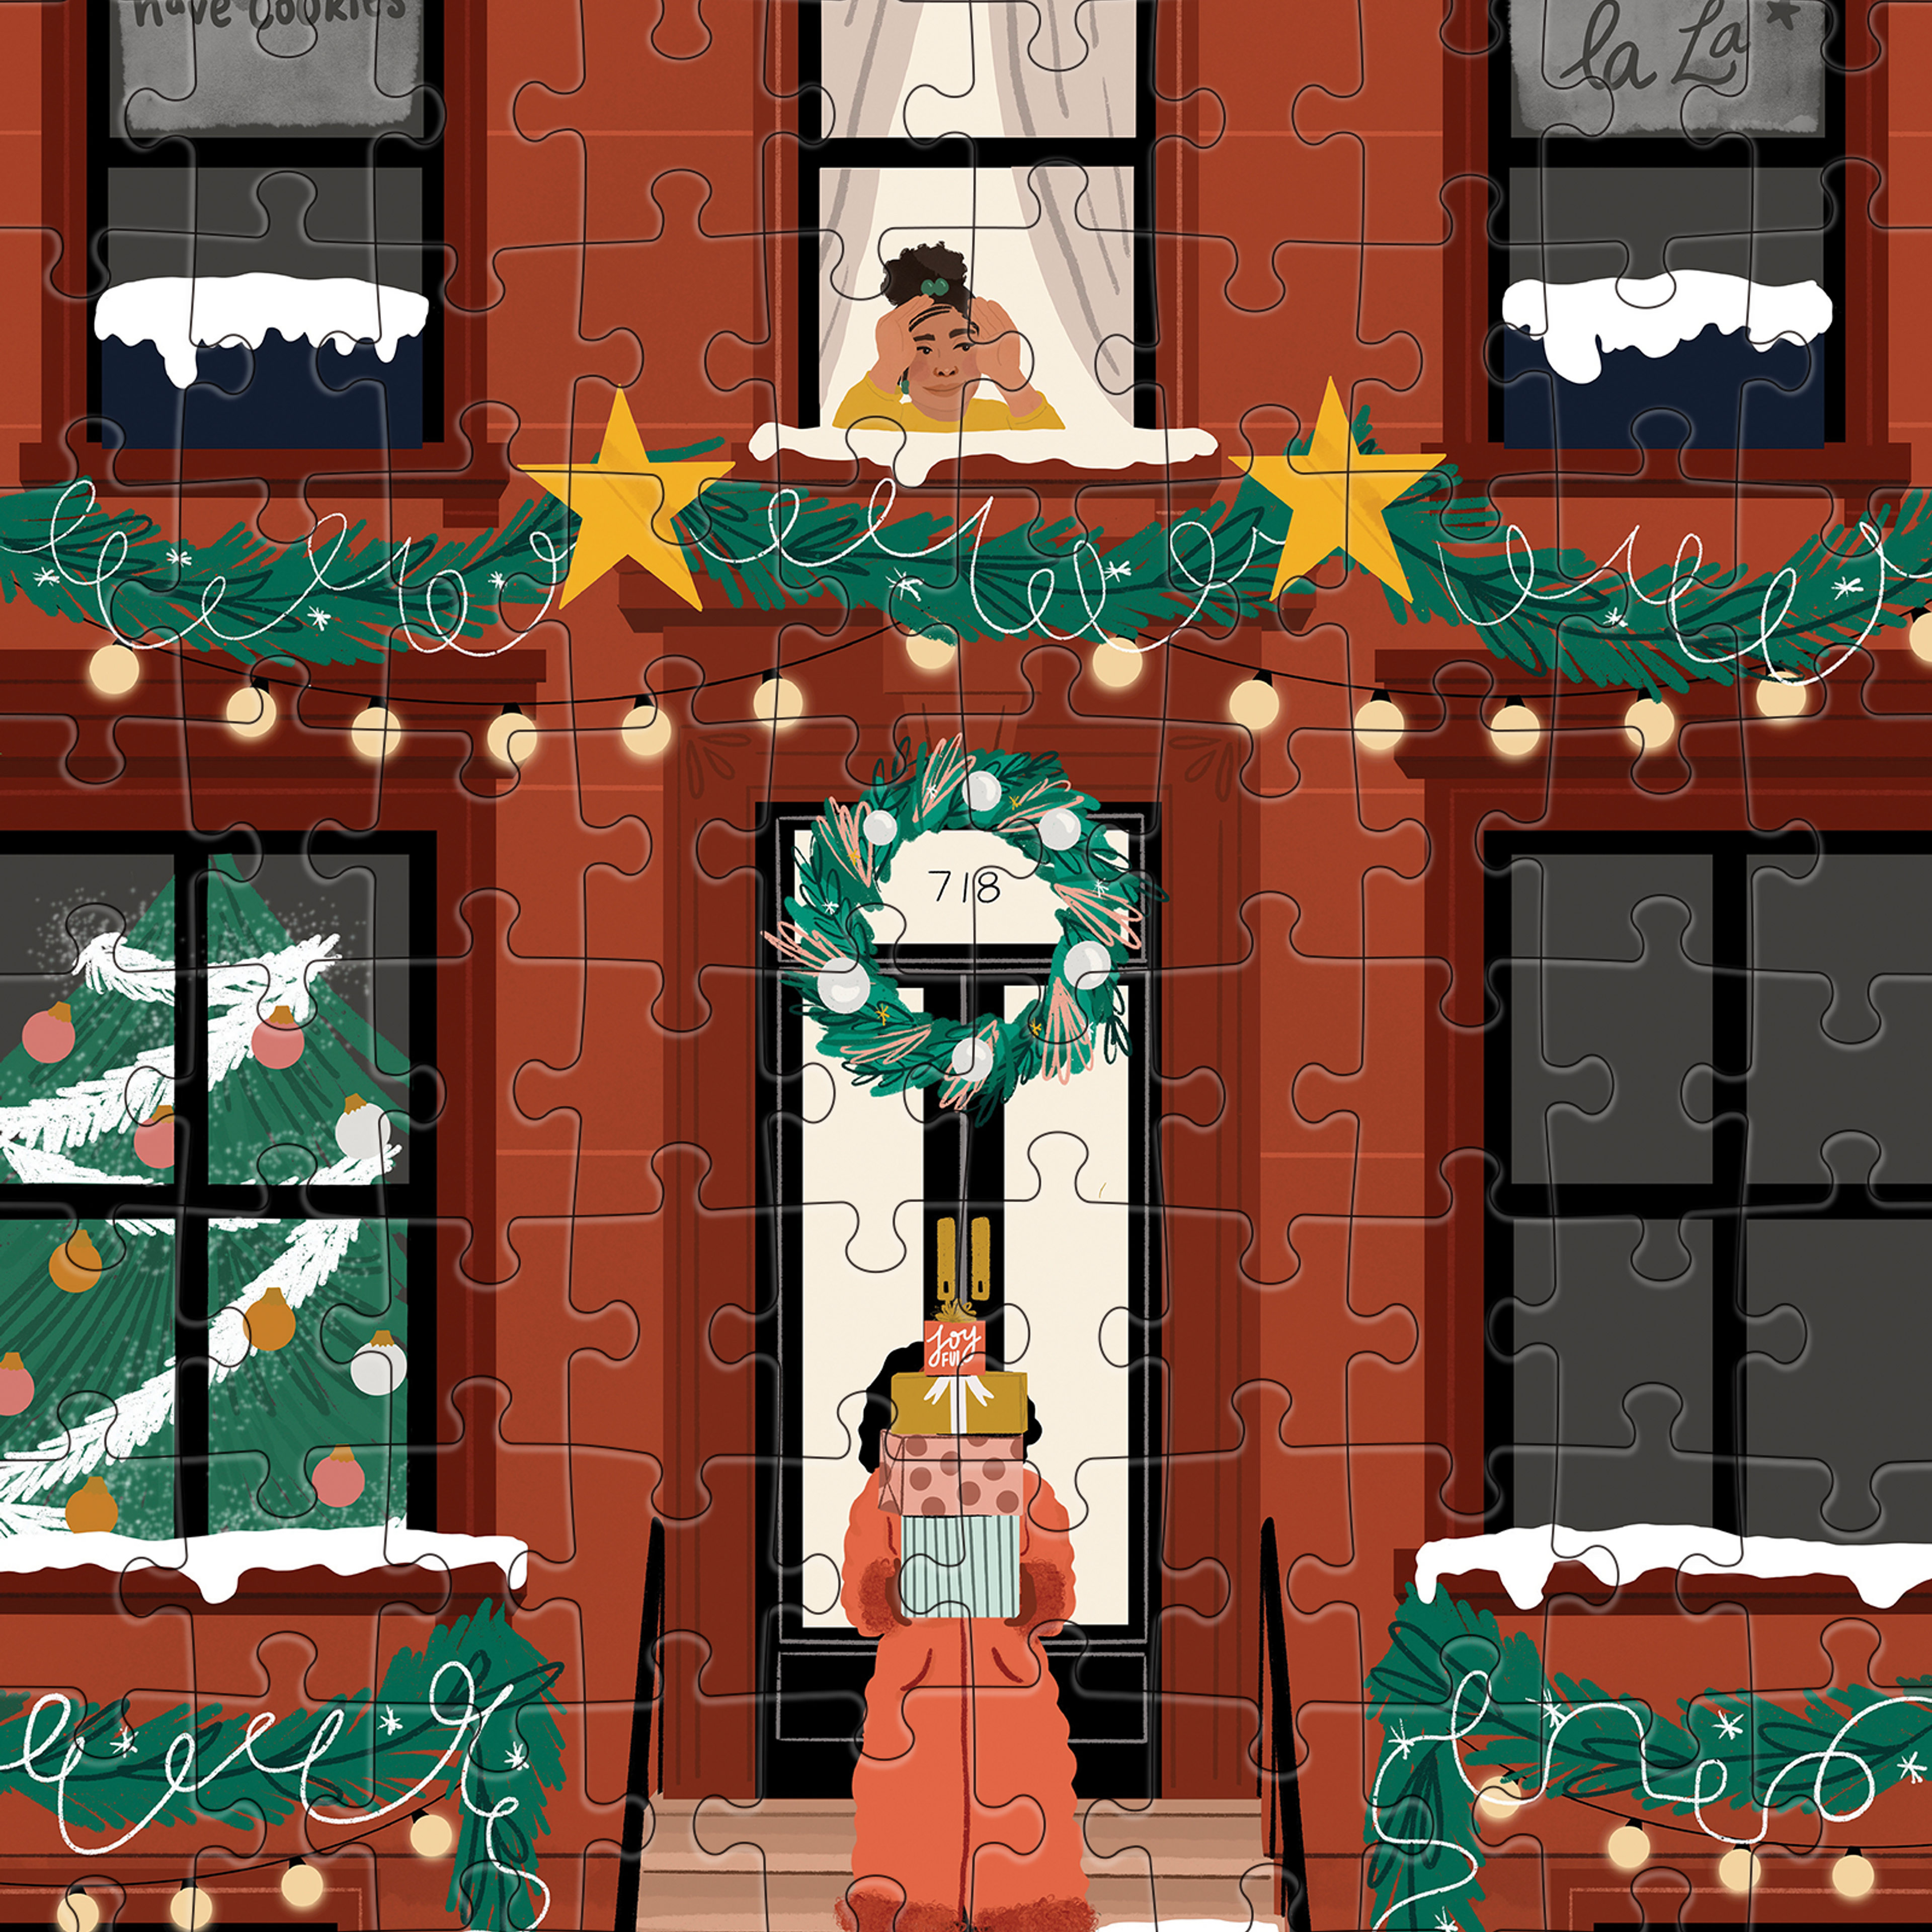 JIGGY Junior, Christmas in Brooklyn by Shenequa Johnson